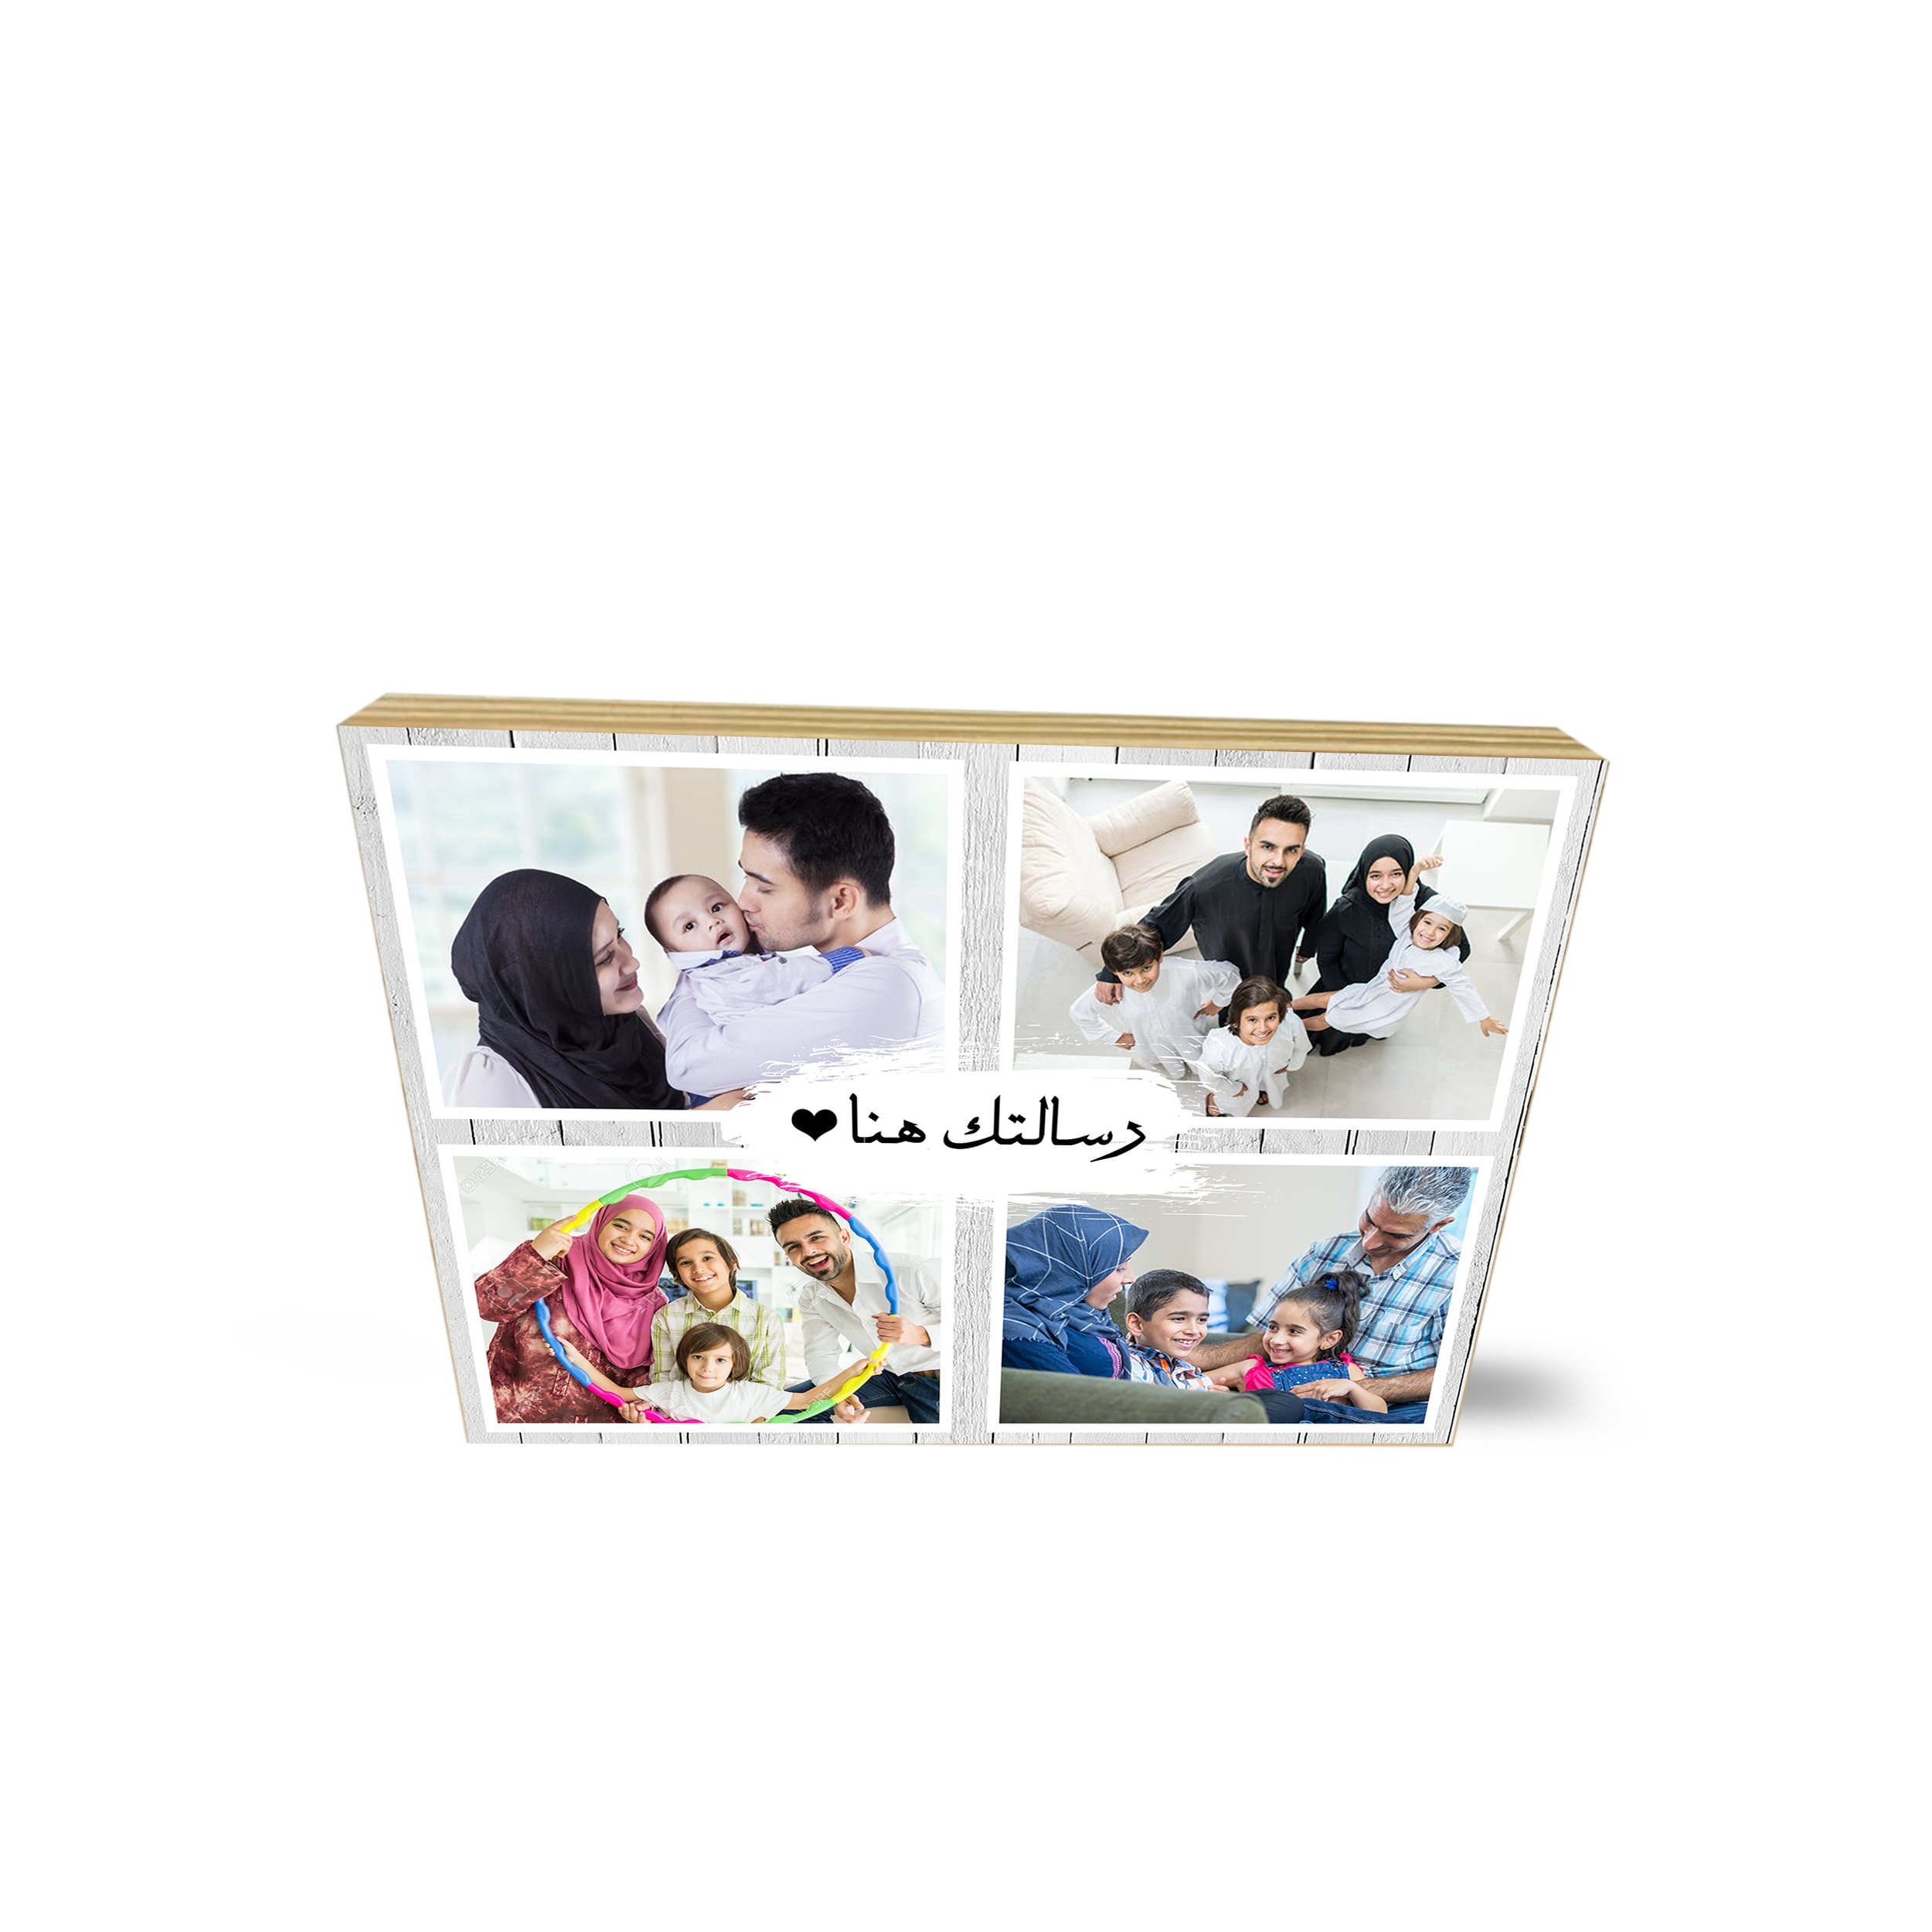 Personalised Arabic Wooden Photo Name Block Family Photo Eid Present Gifts, Medium – 7.0″ x 5.0″ / Landscape – AI Printing